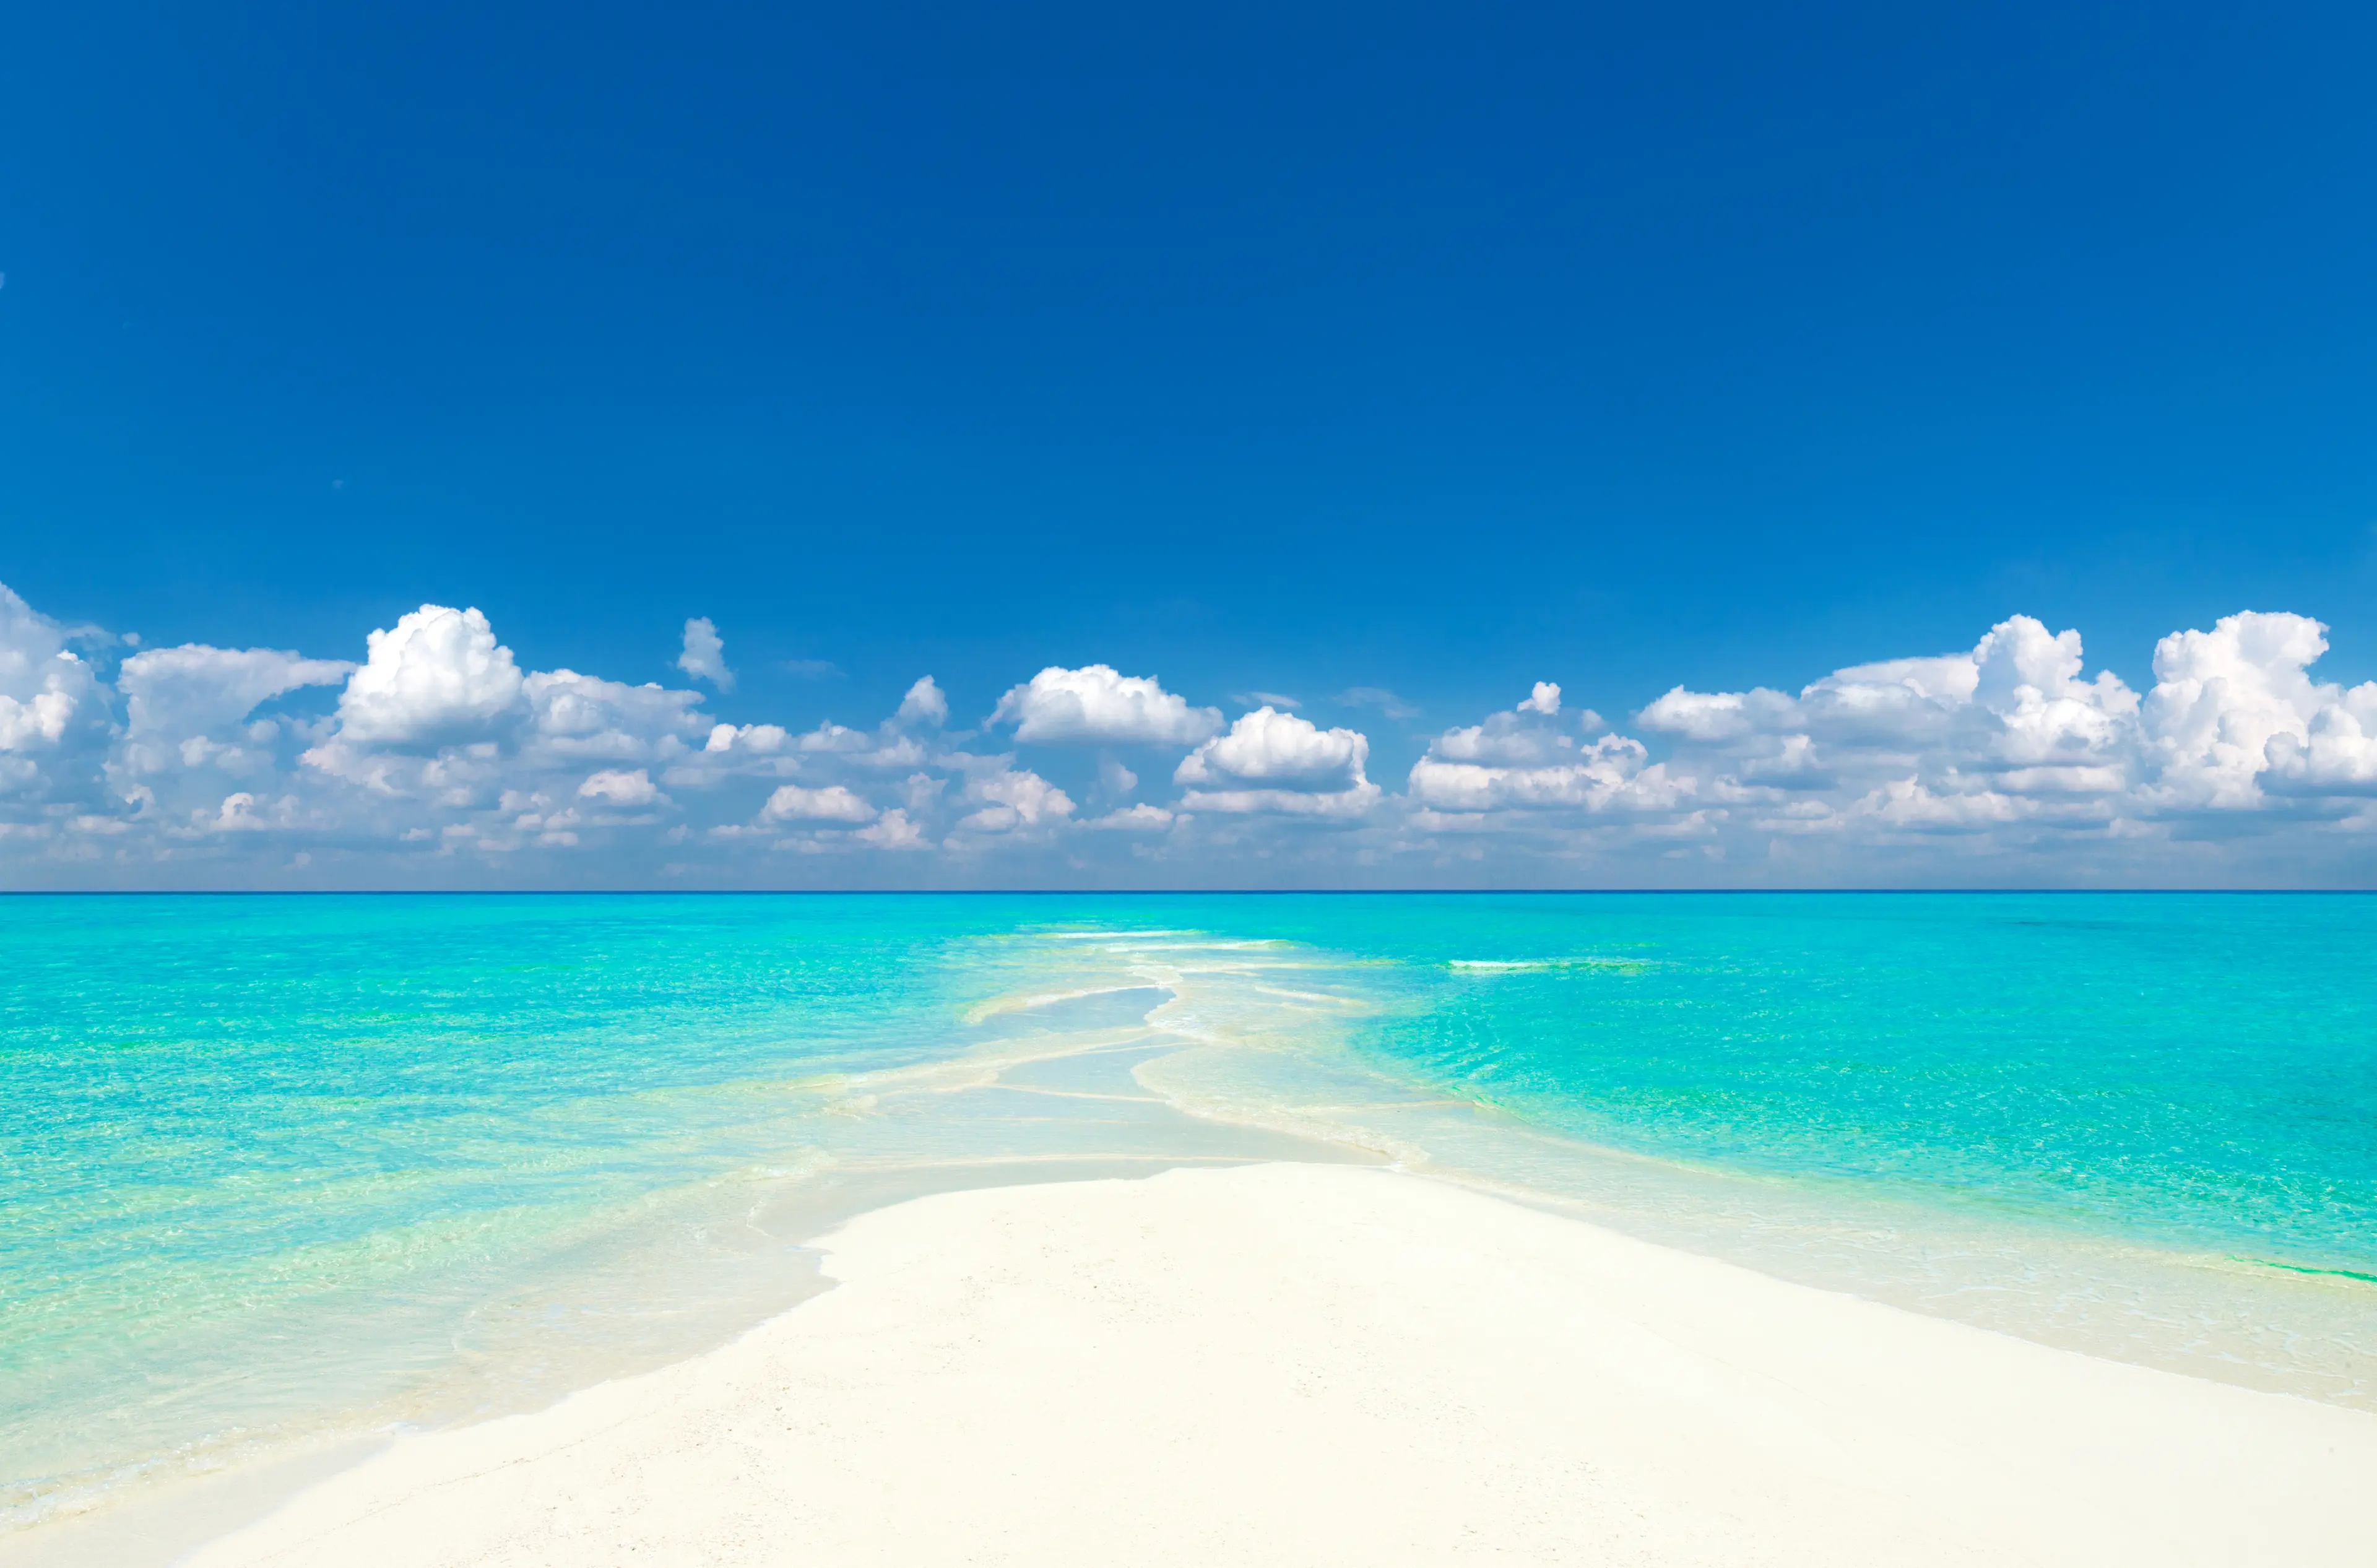 Tropical island with white sandy beach and sea